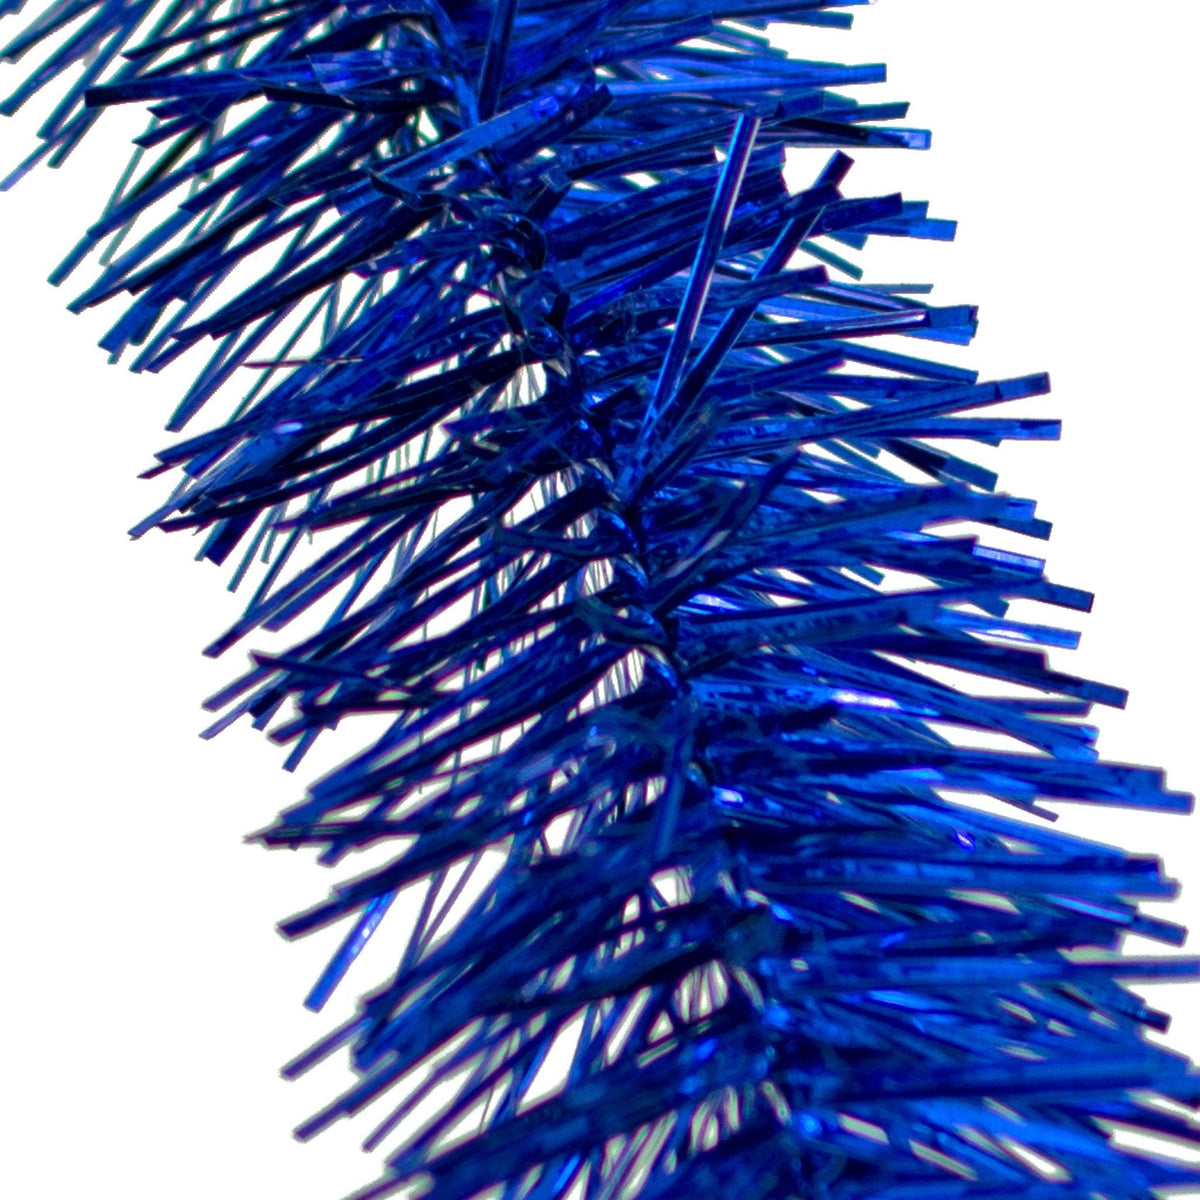 Lee Display's brand new 25ft Shiny Metallic Blue Tinsel Garlands and Fringe Embellishments on sale now at leedisplay.com